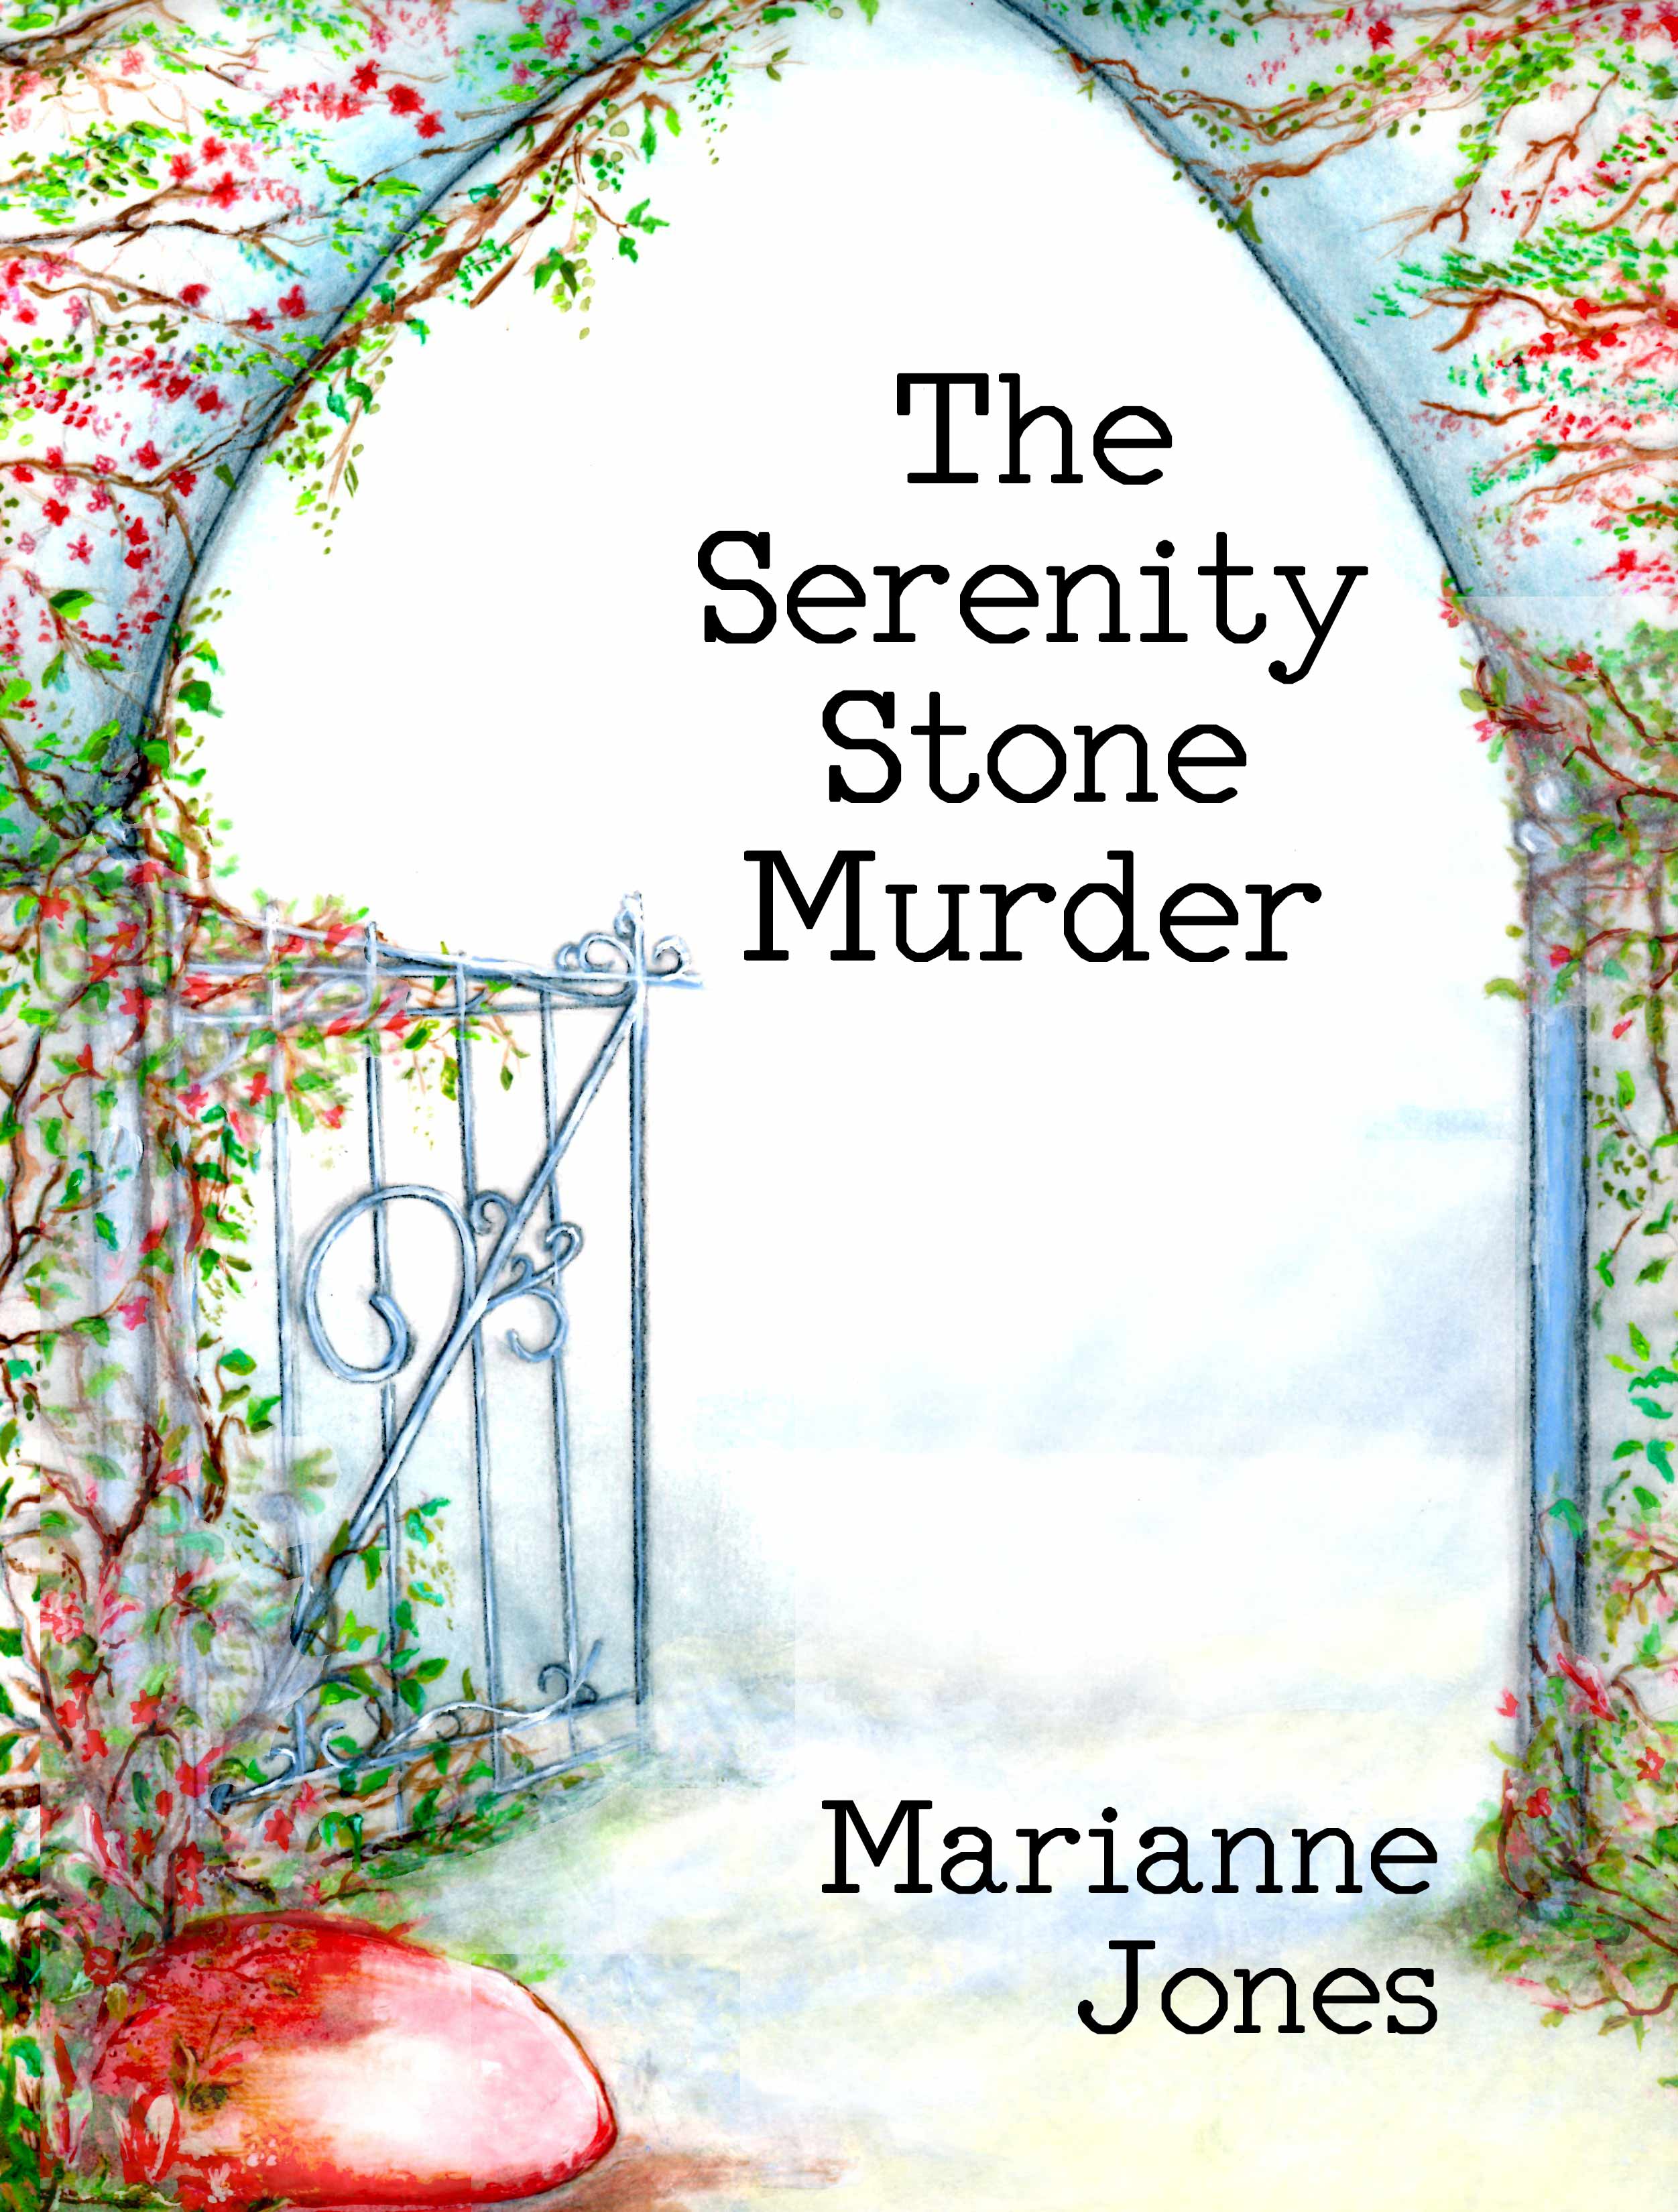 FREE: The Serenity Stone Murder by Marianne Jones by Marianne Jones